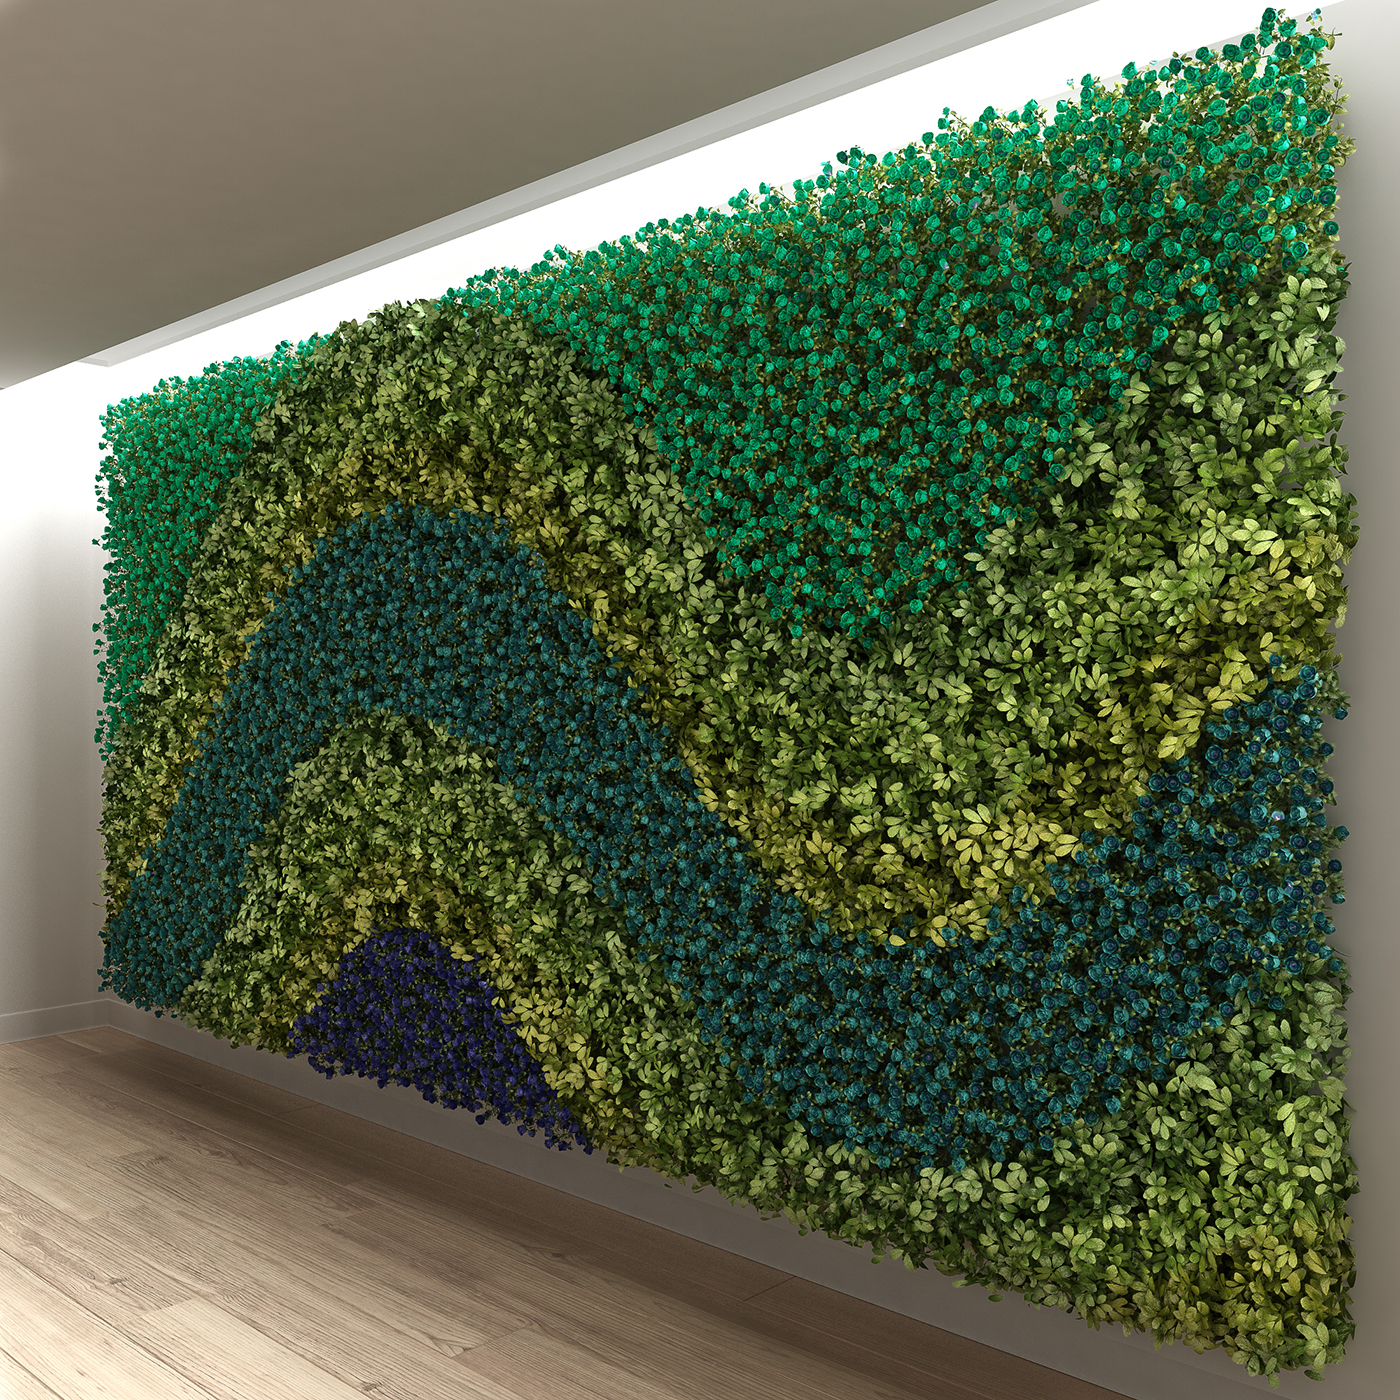 3D model Render rendering modeling 3D CGI cg art interior design  plants Garden Wall